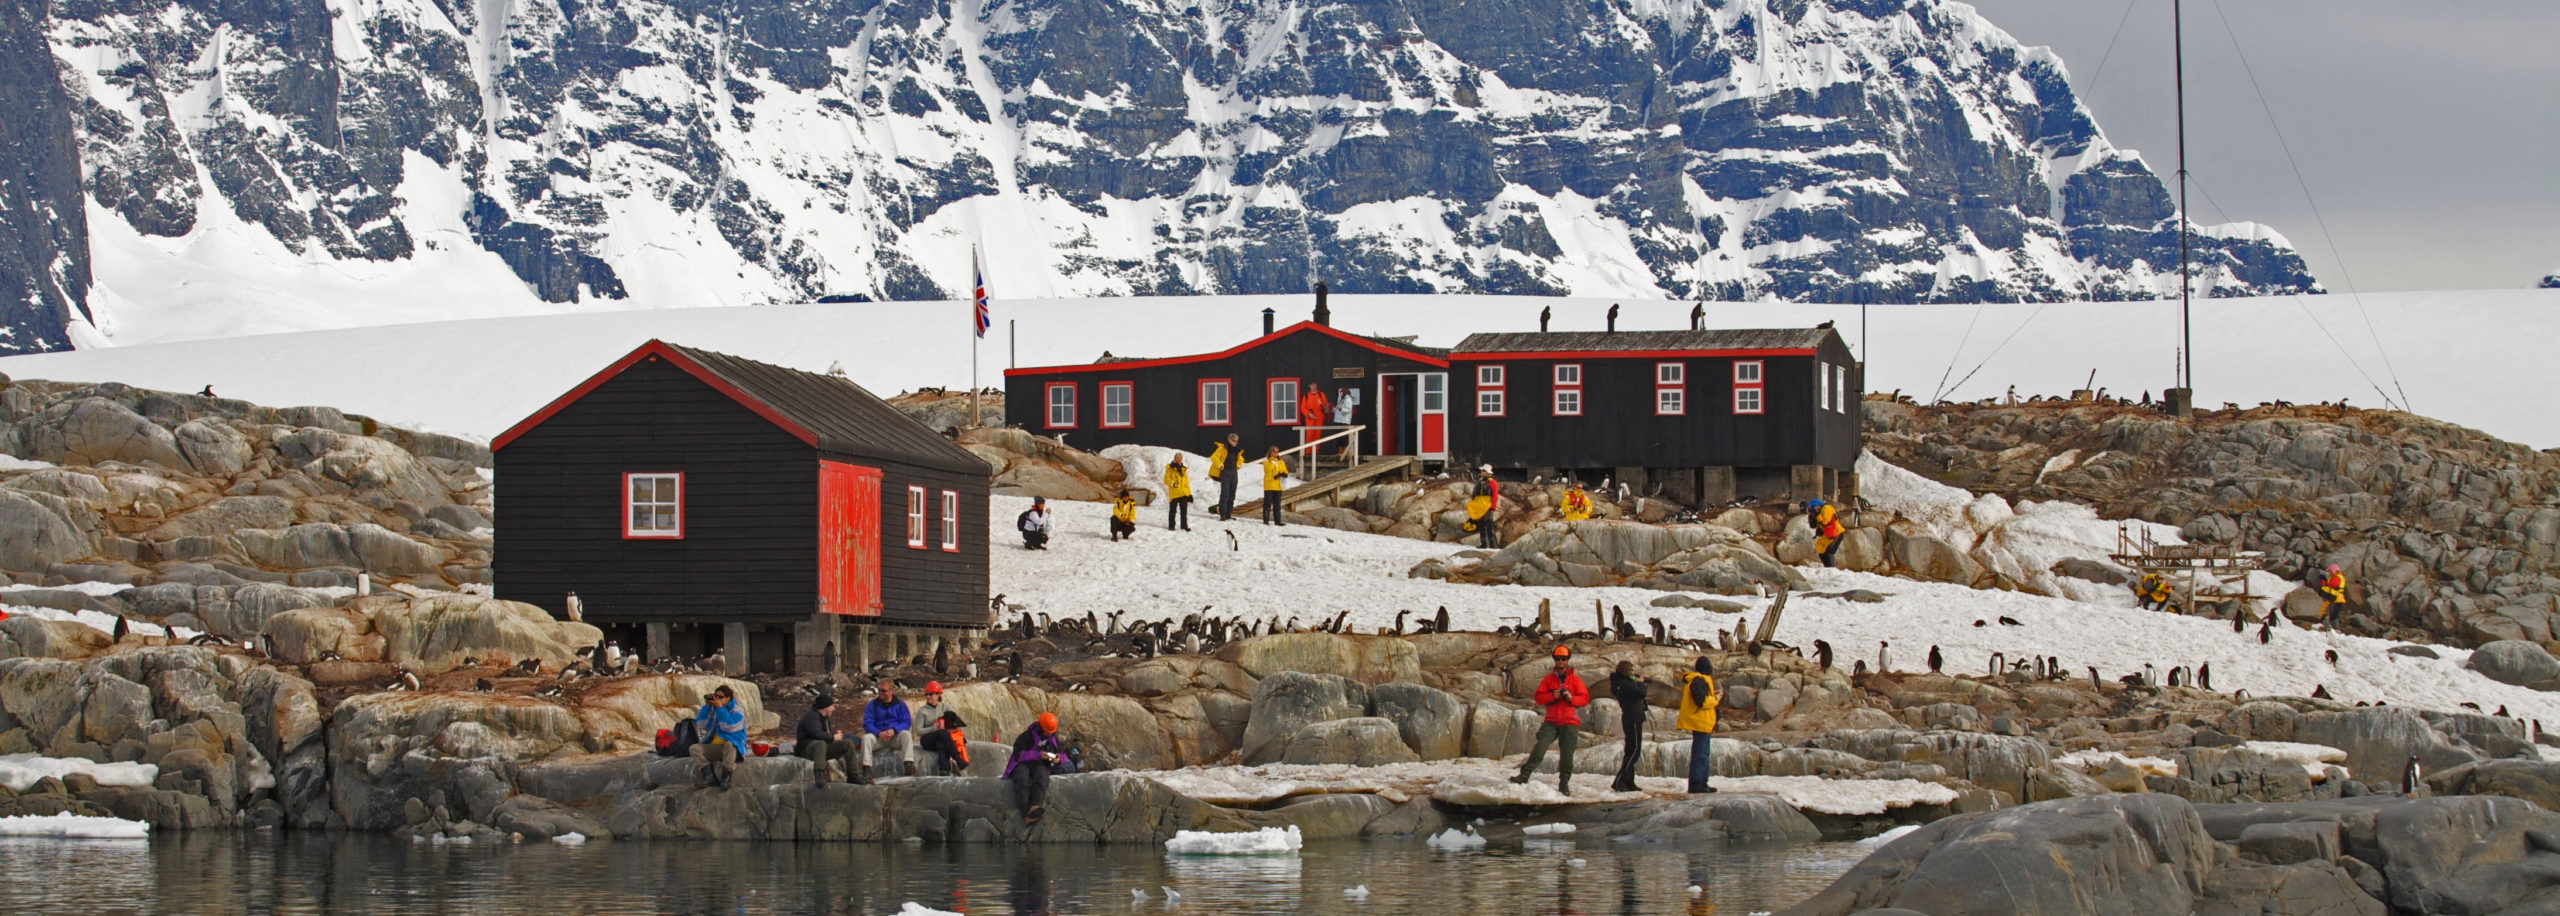 Antarctic tourism - British Antarctic Survey